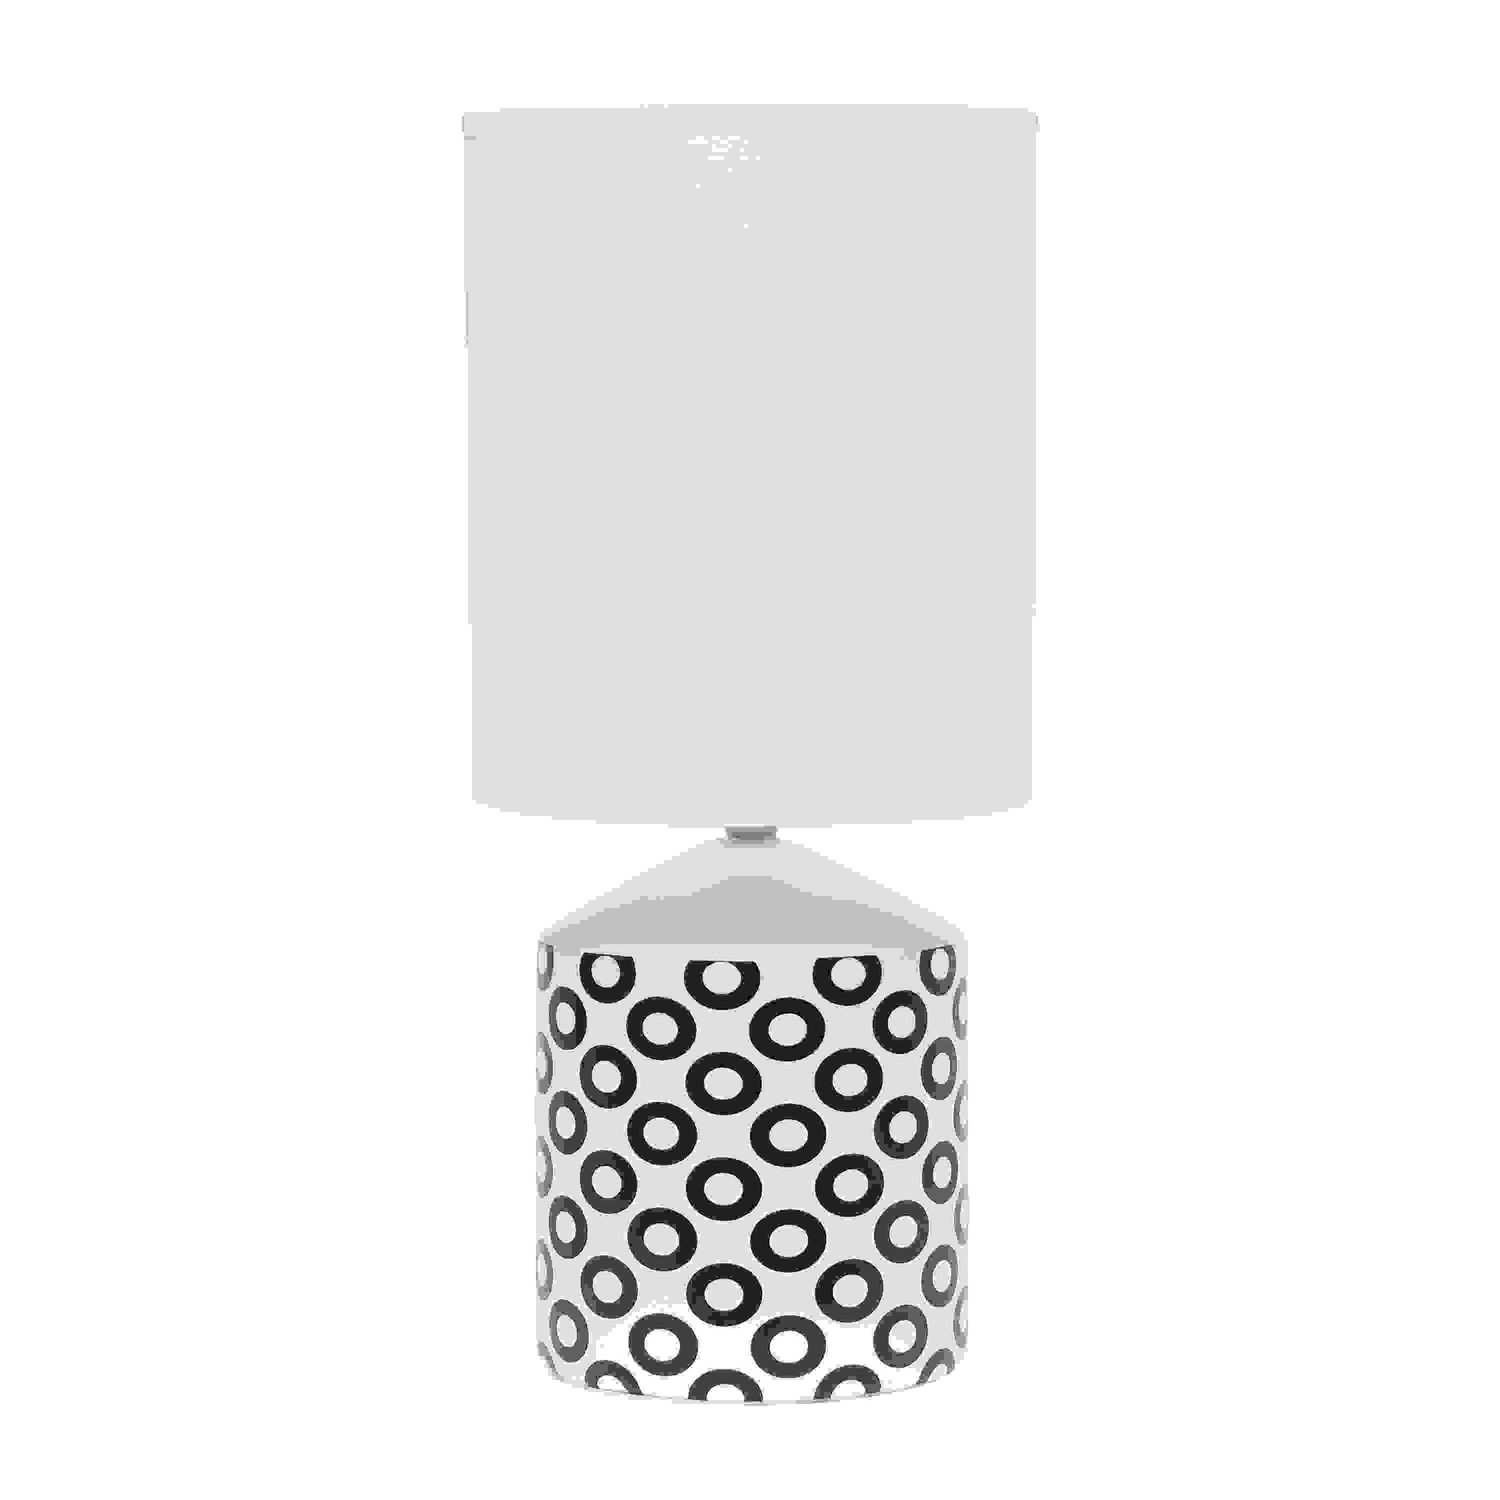 Simple Designs Fresh Prints Table Lamp, Black Ovals